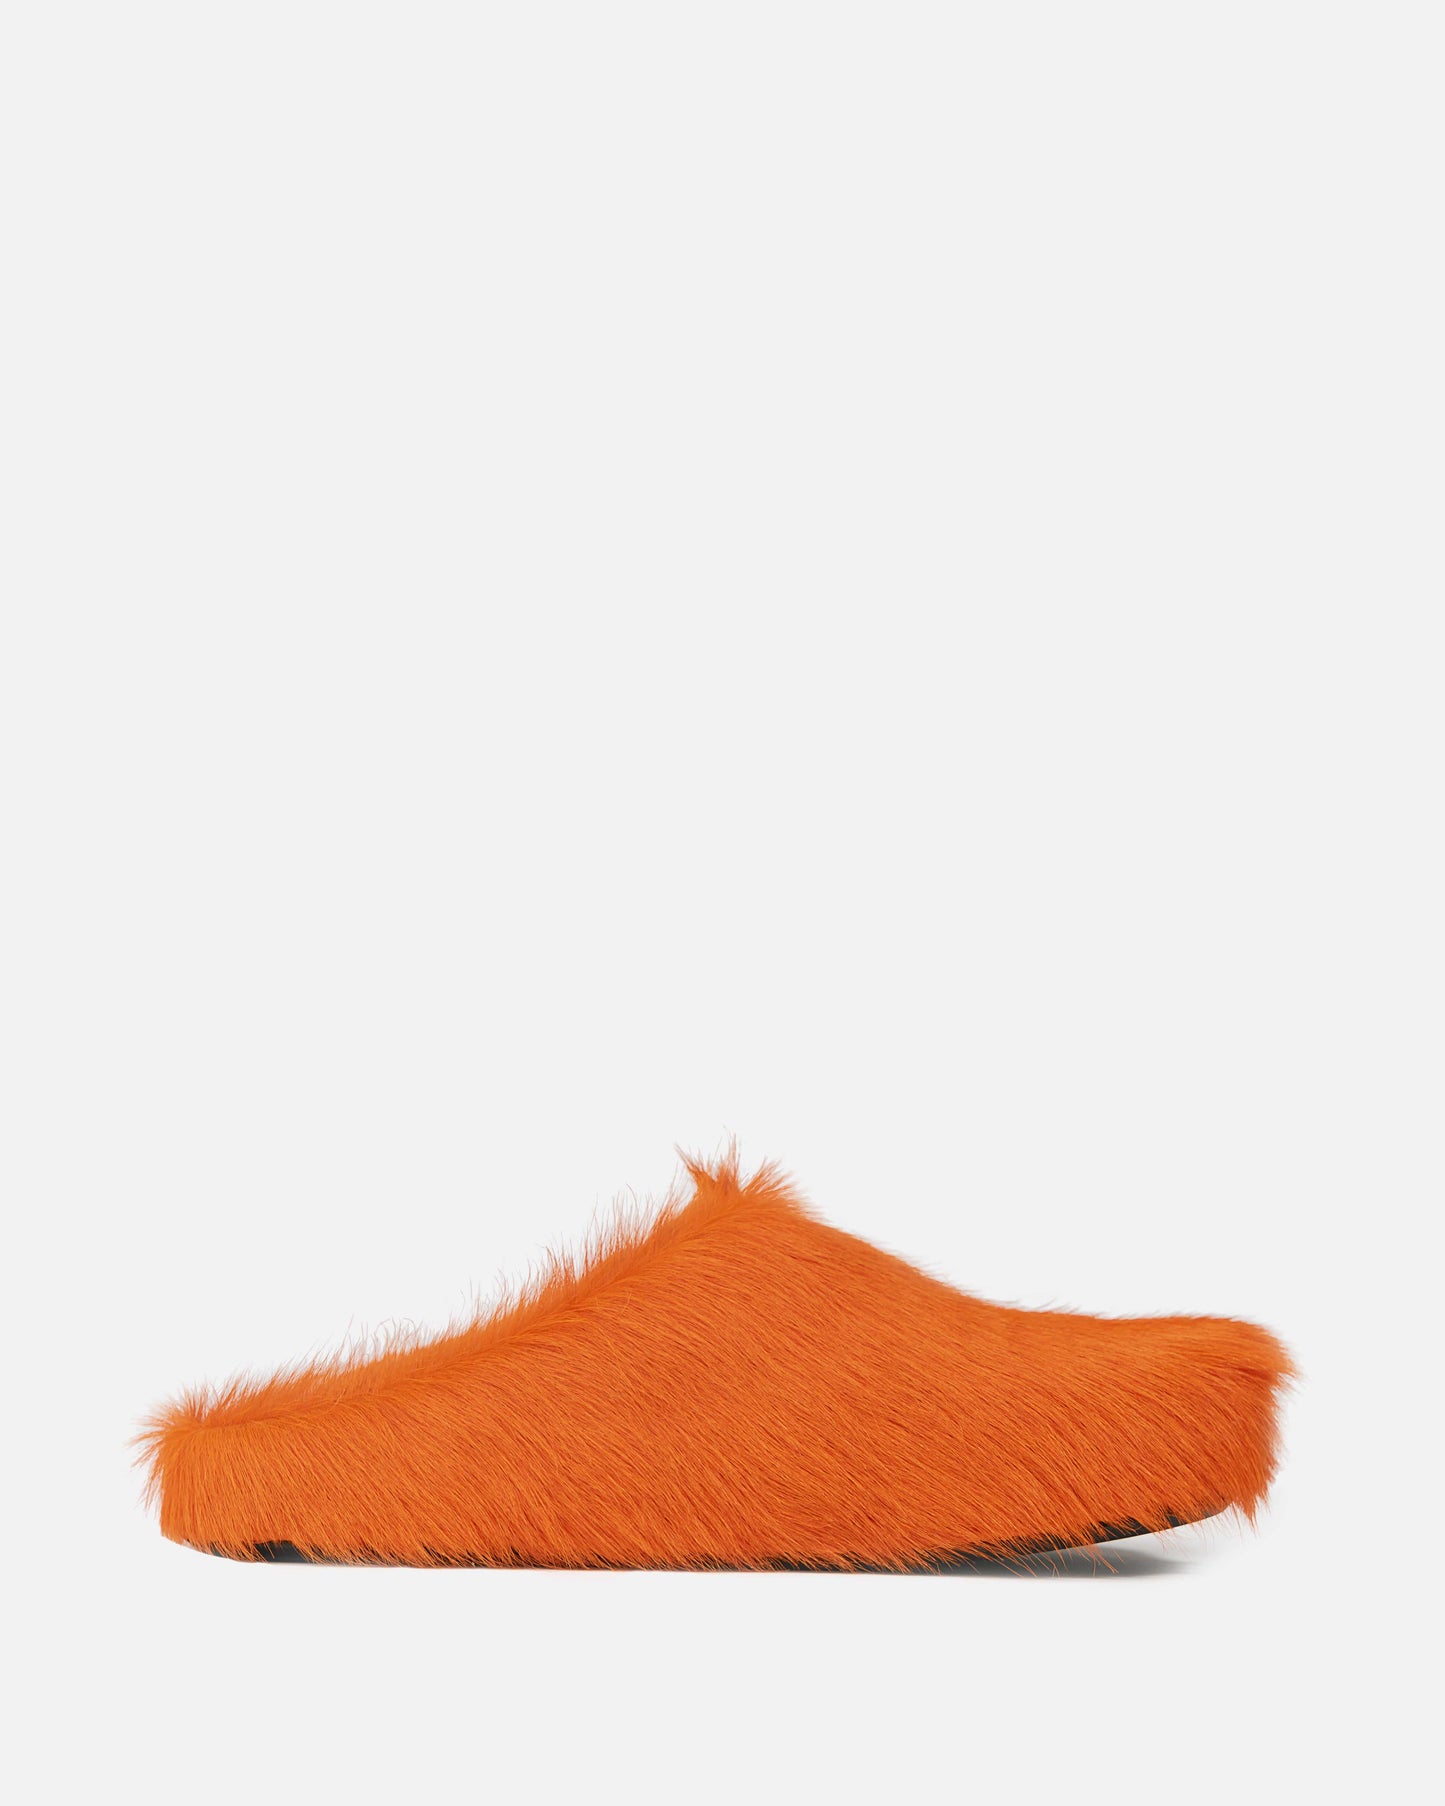 Marni Men's Shoes Calf-Hair Sabot in Orange